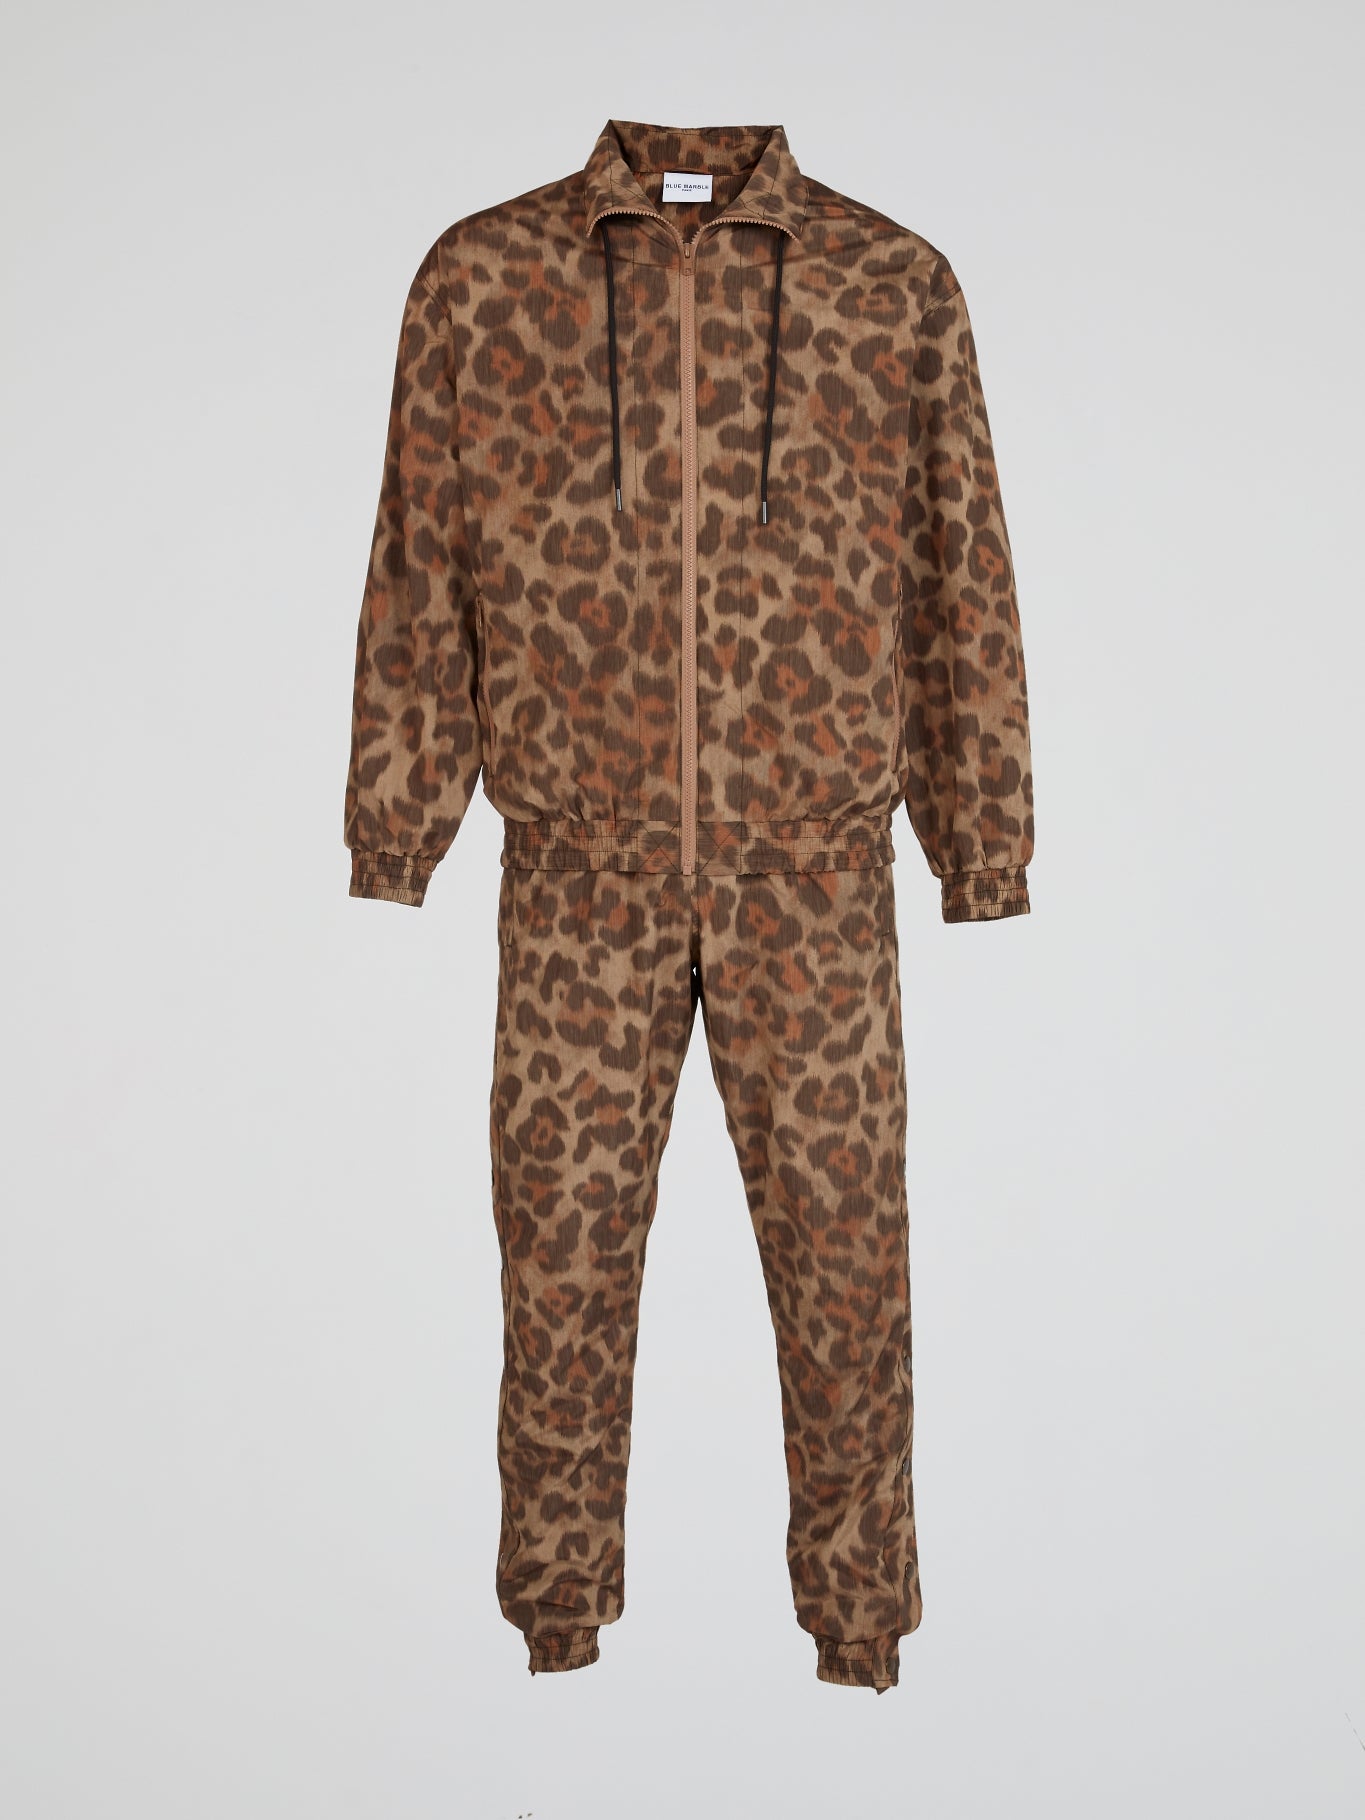 Leopard Print Track Jacket